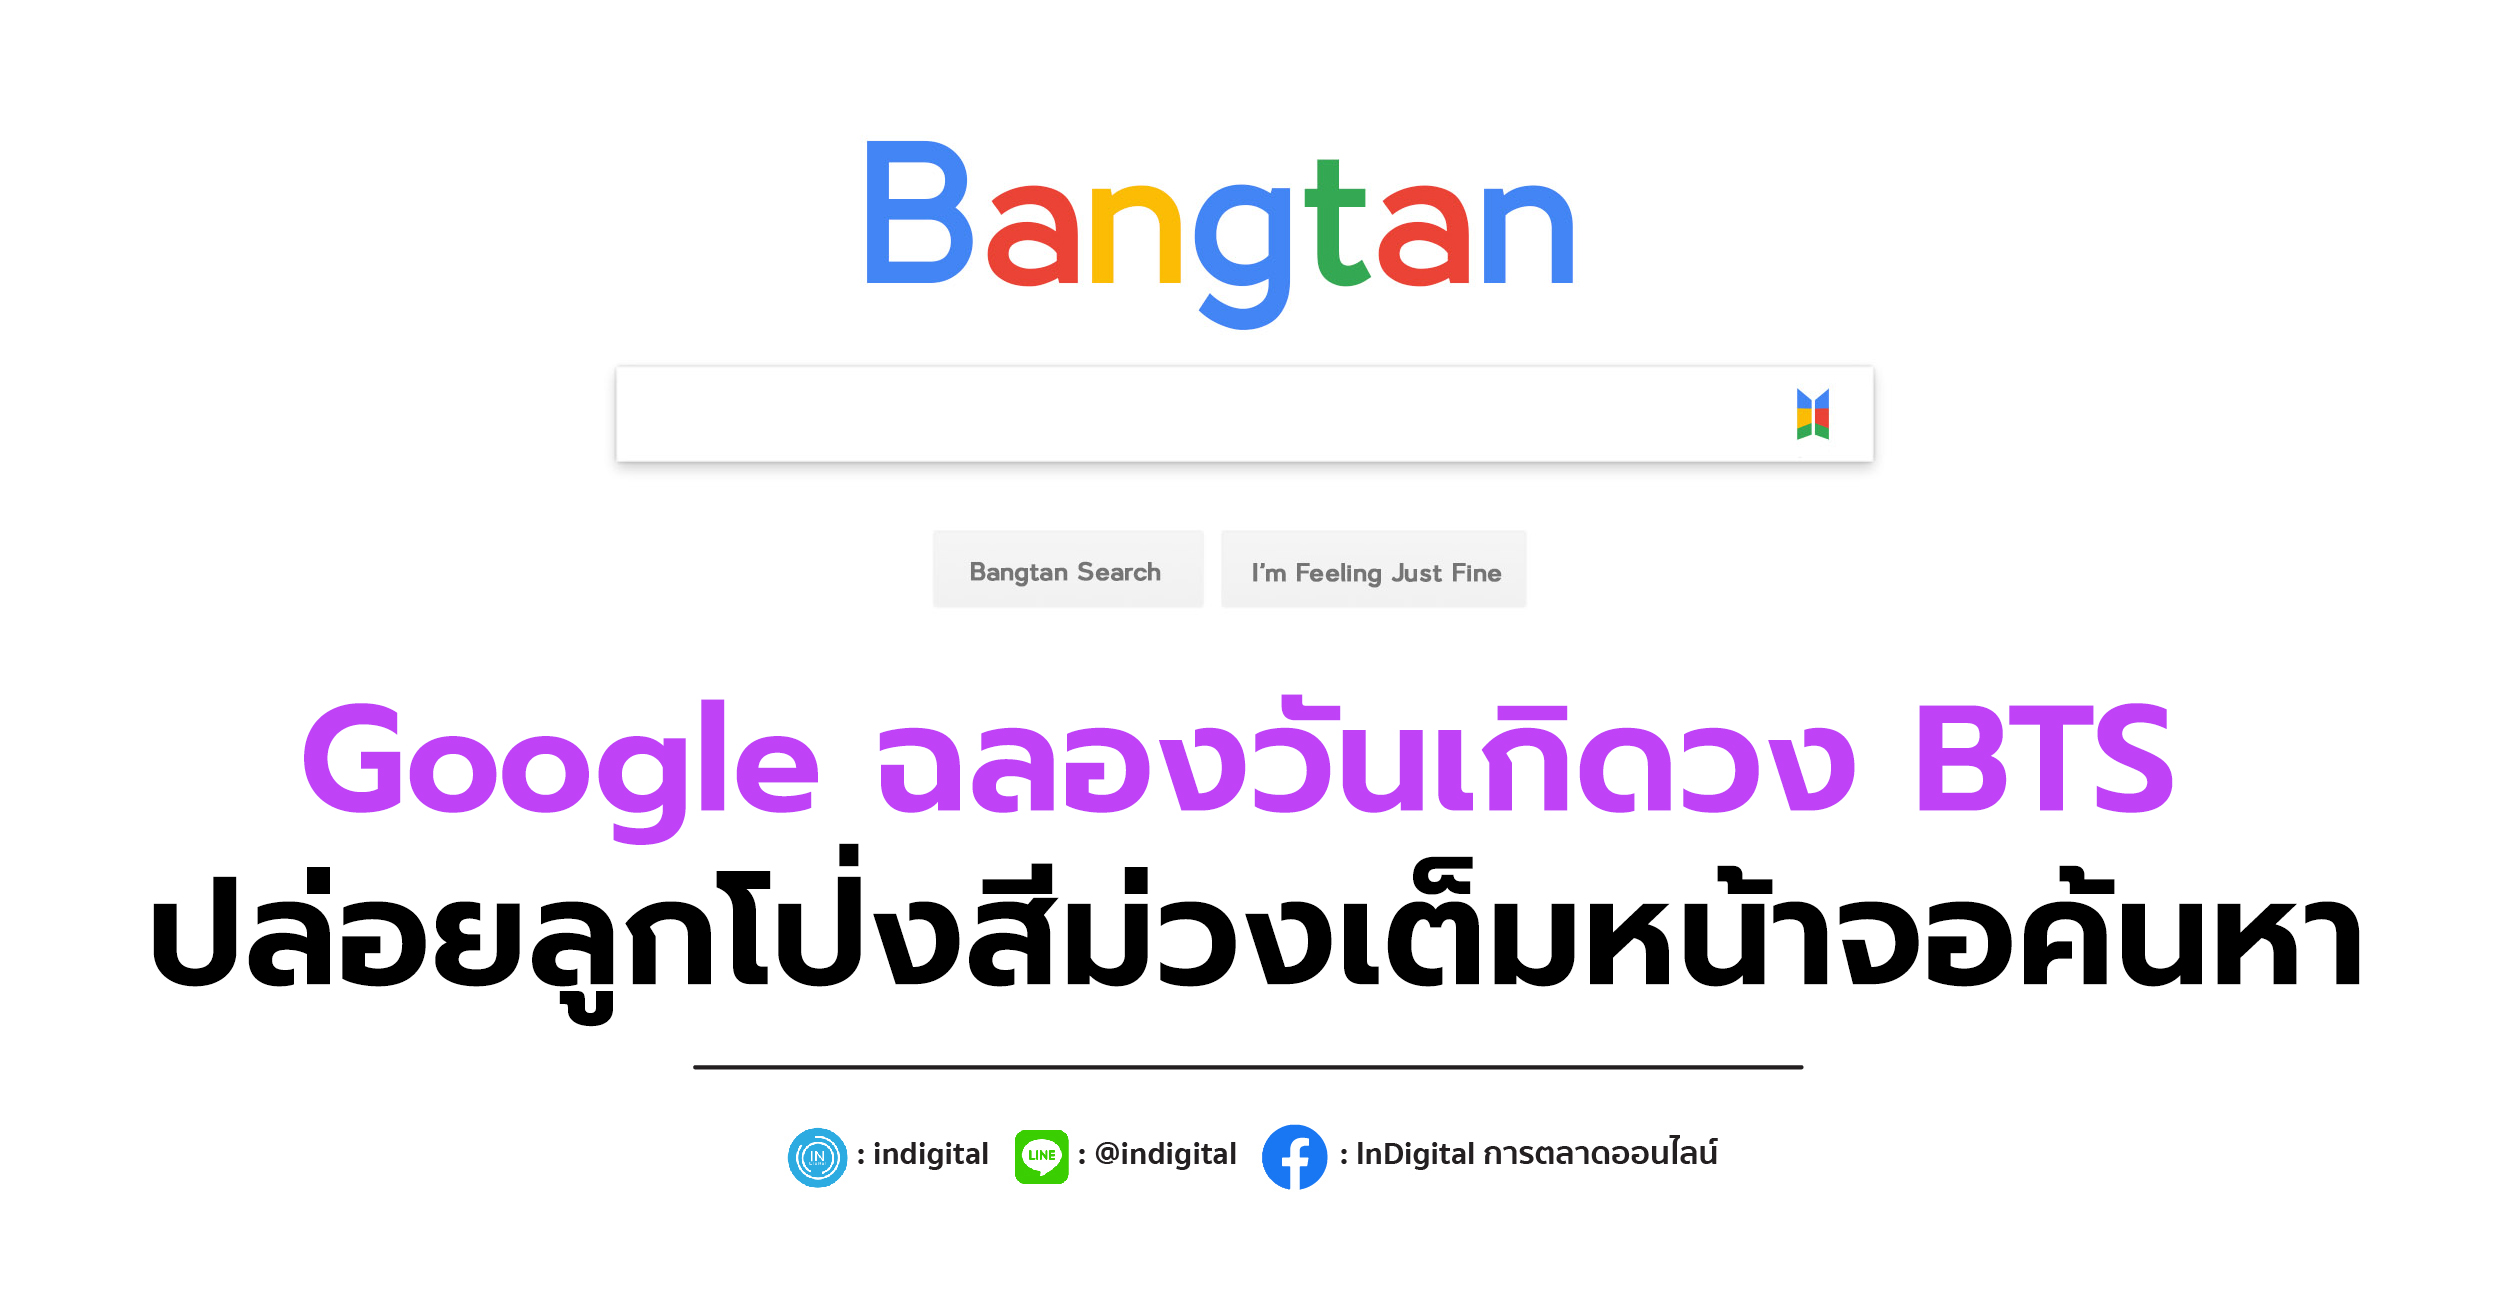 Google ฉลองวันเกิดวง BTS ปล่อยลูกโป่งสีม่วงเต็มหน้าจอค้นหา